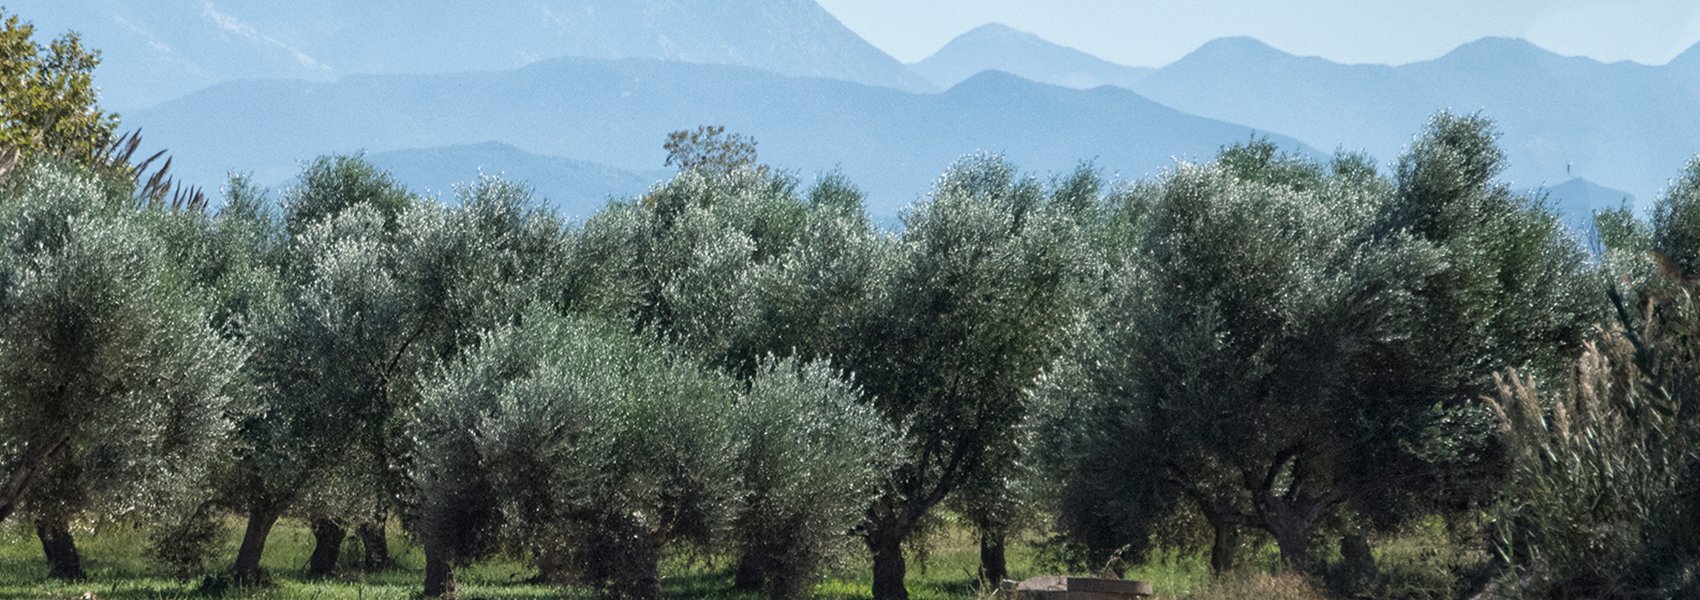 olive groves in greece